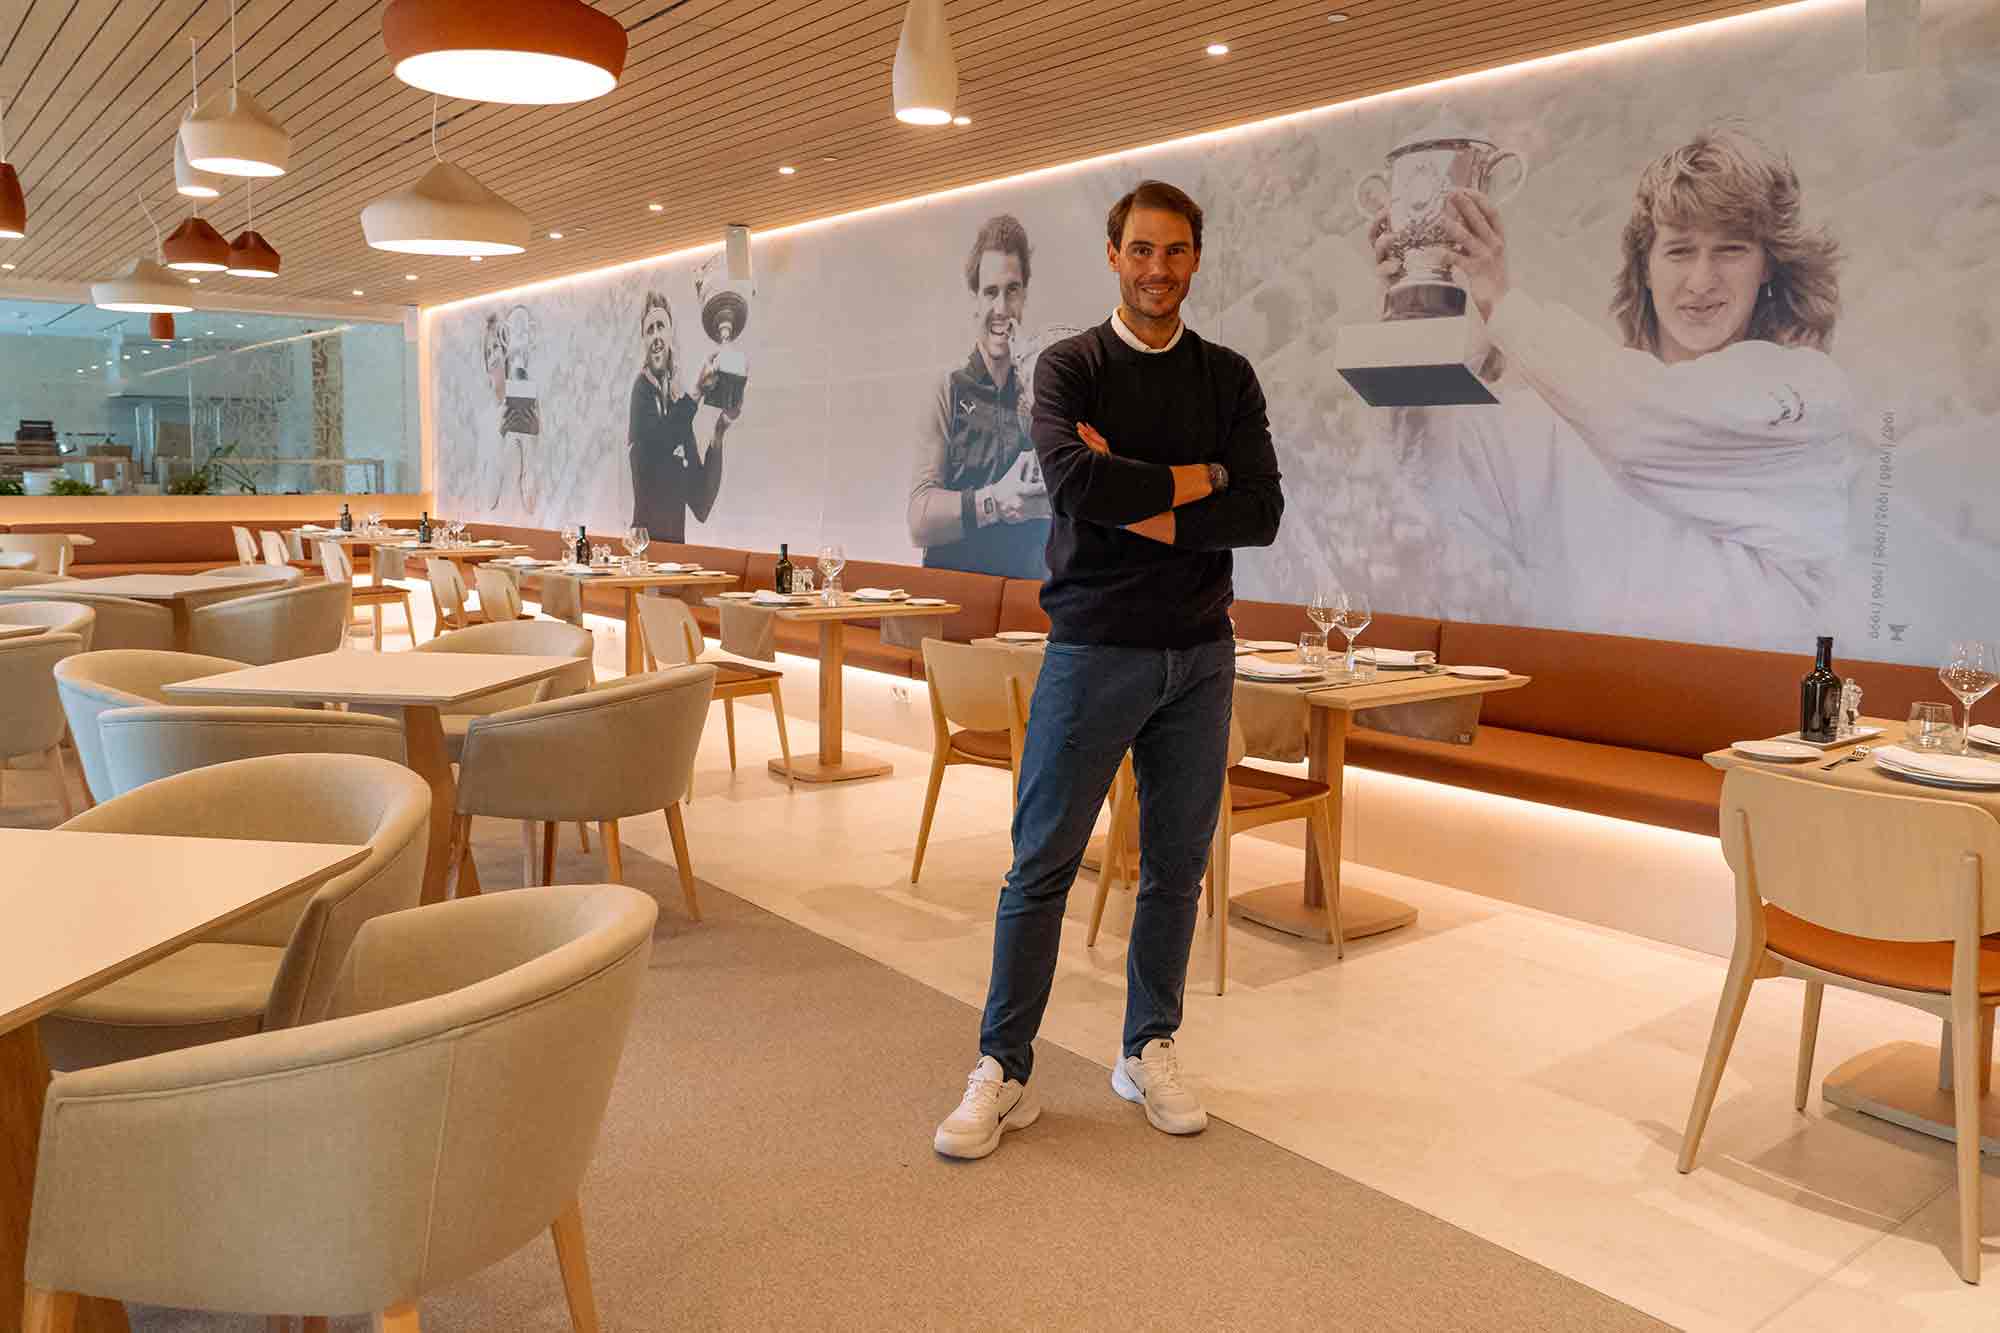 Rafa Nadal opens the “Roland-Garros Restaurant” at the Academy